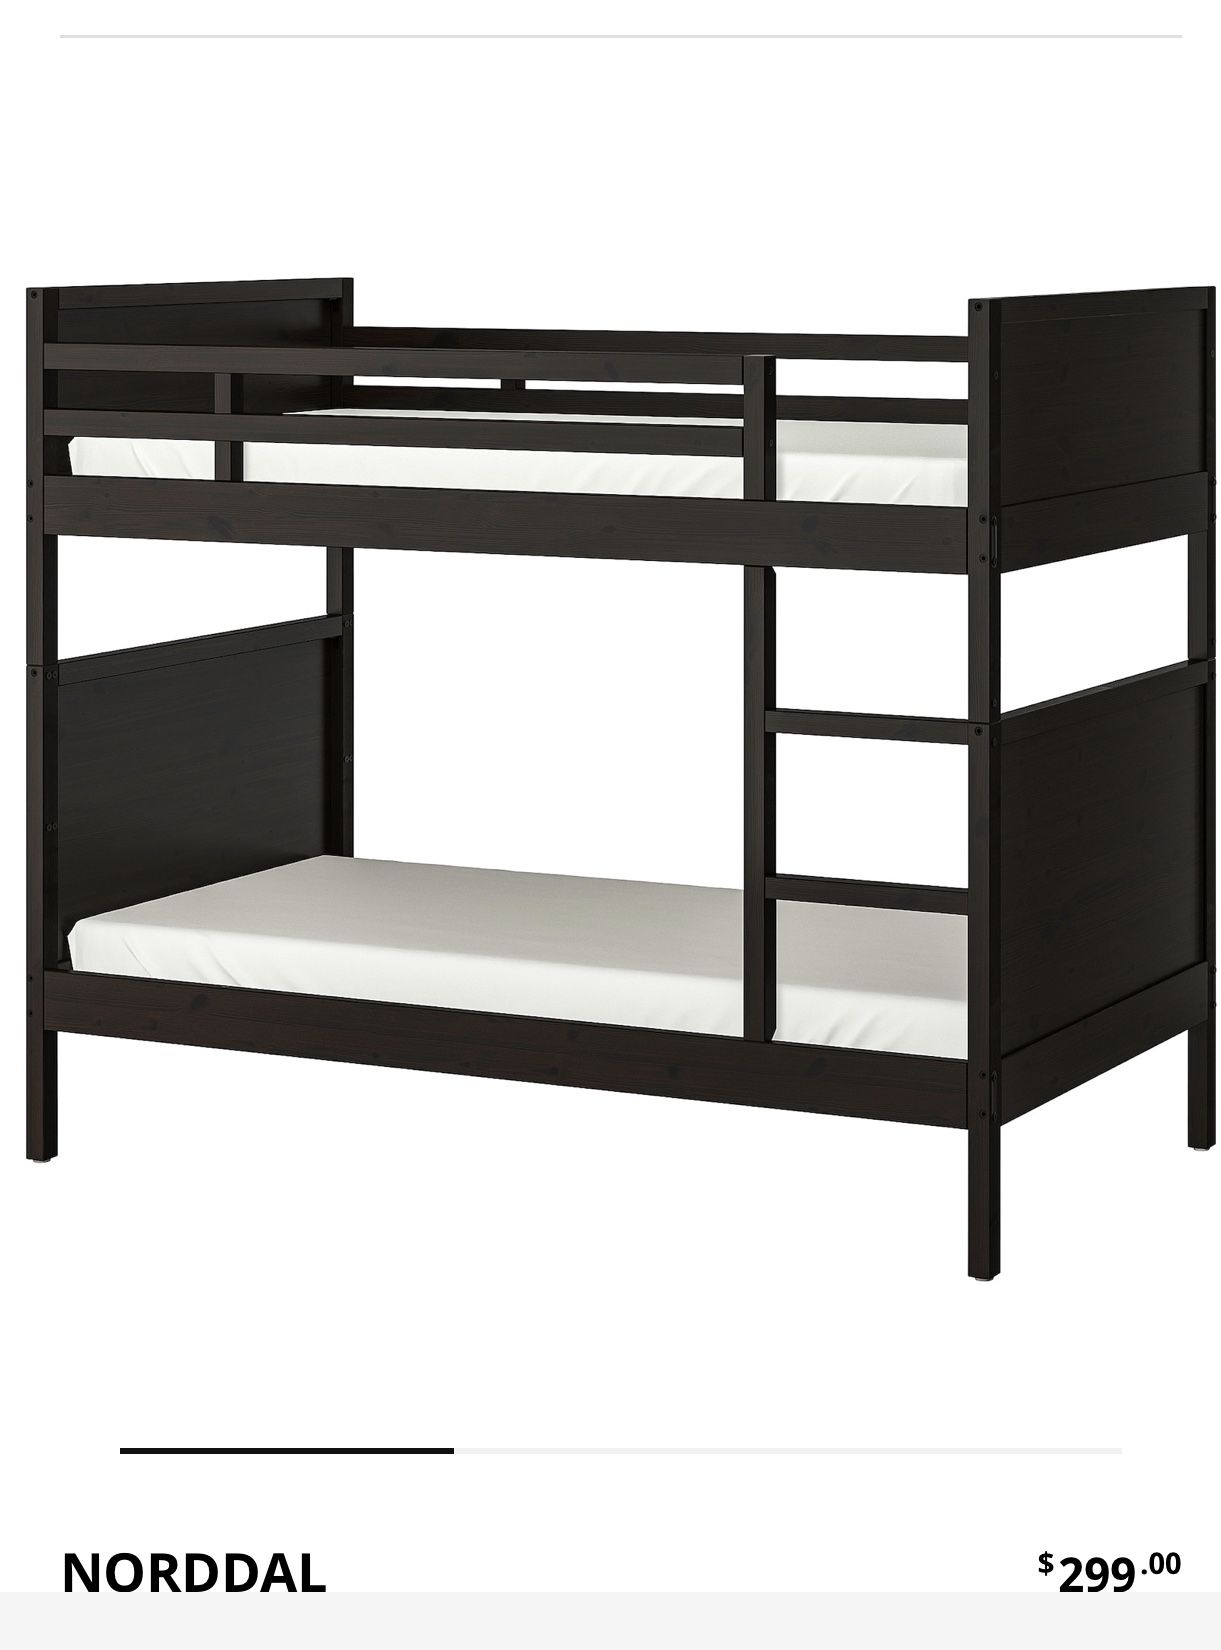 IKEA twin bunk beds, norddal model